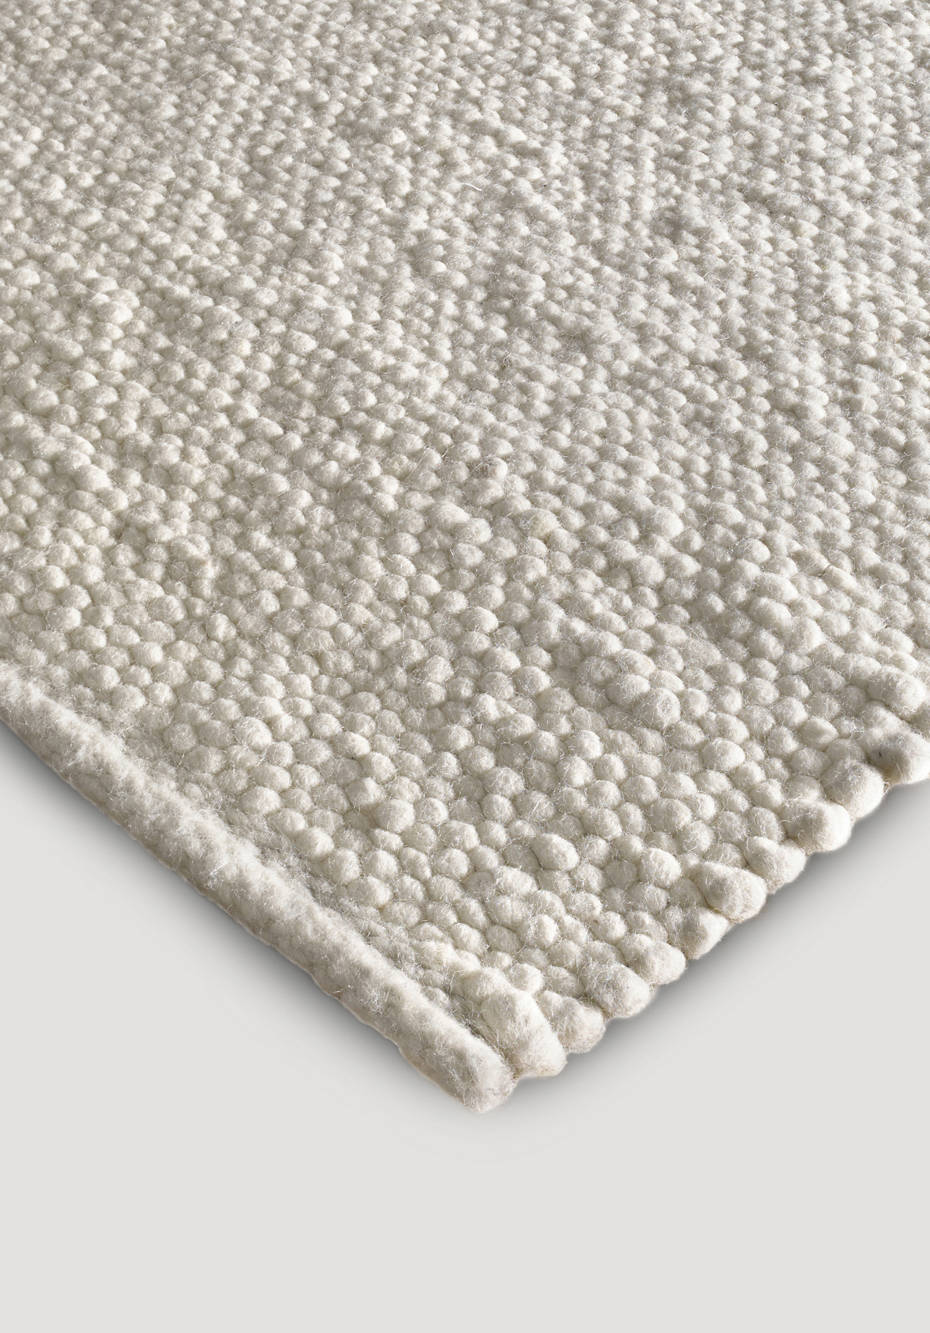 Woven carpet made of pure dyke sheep wool